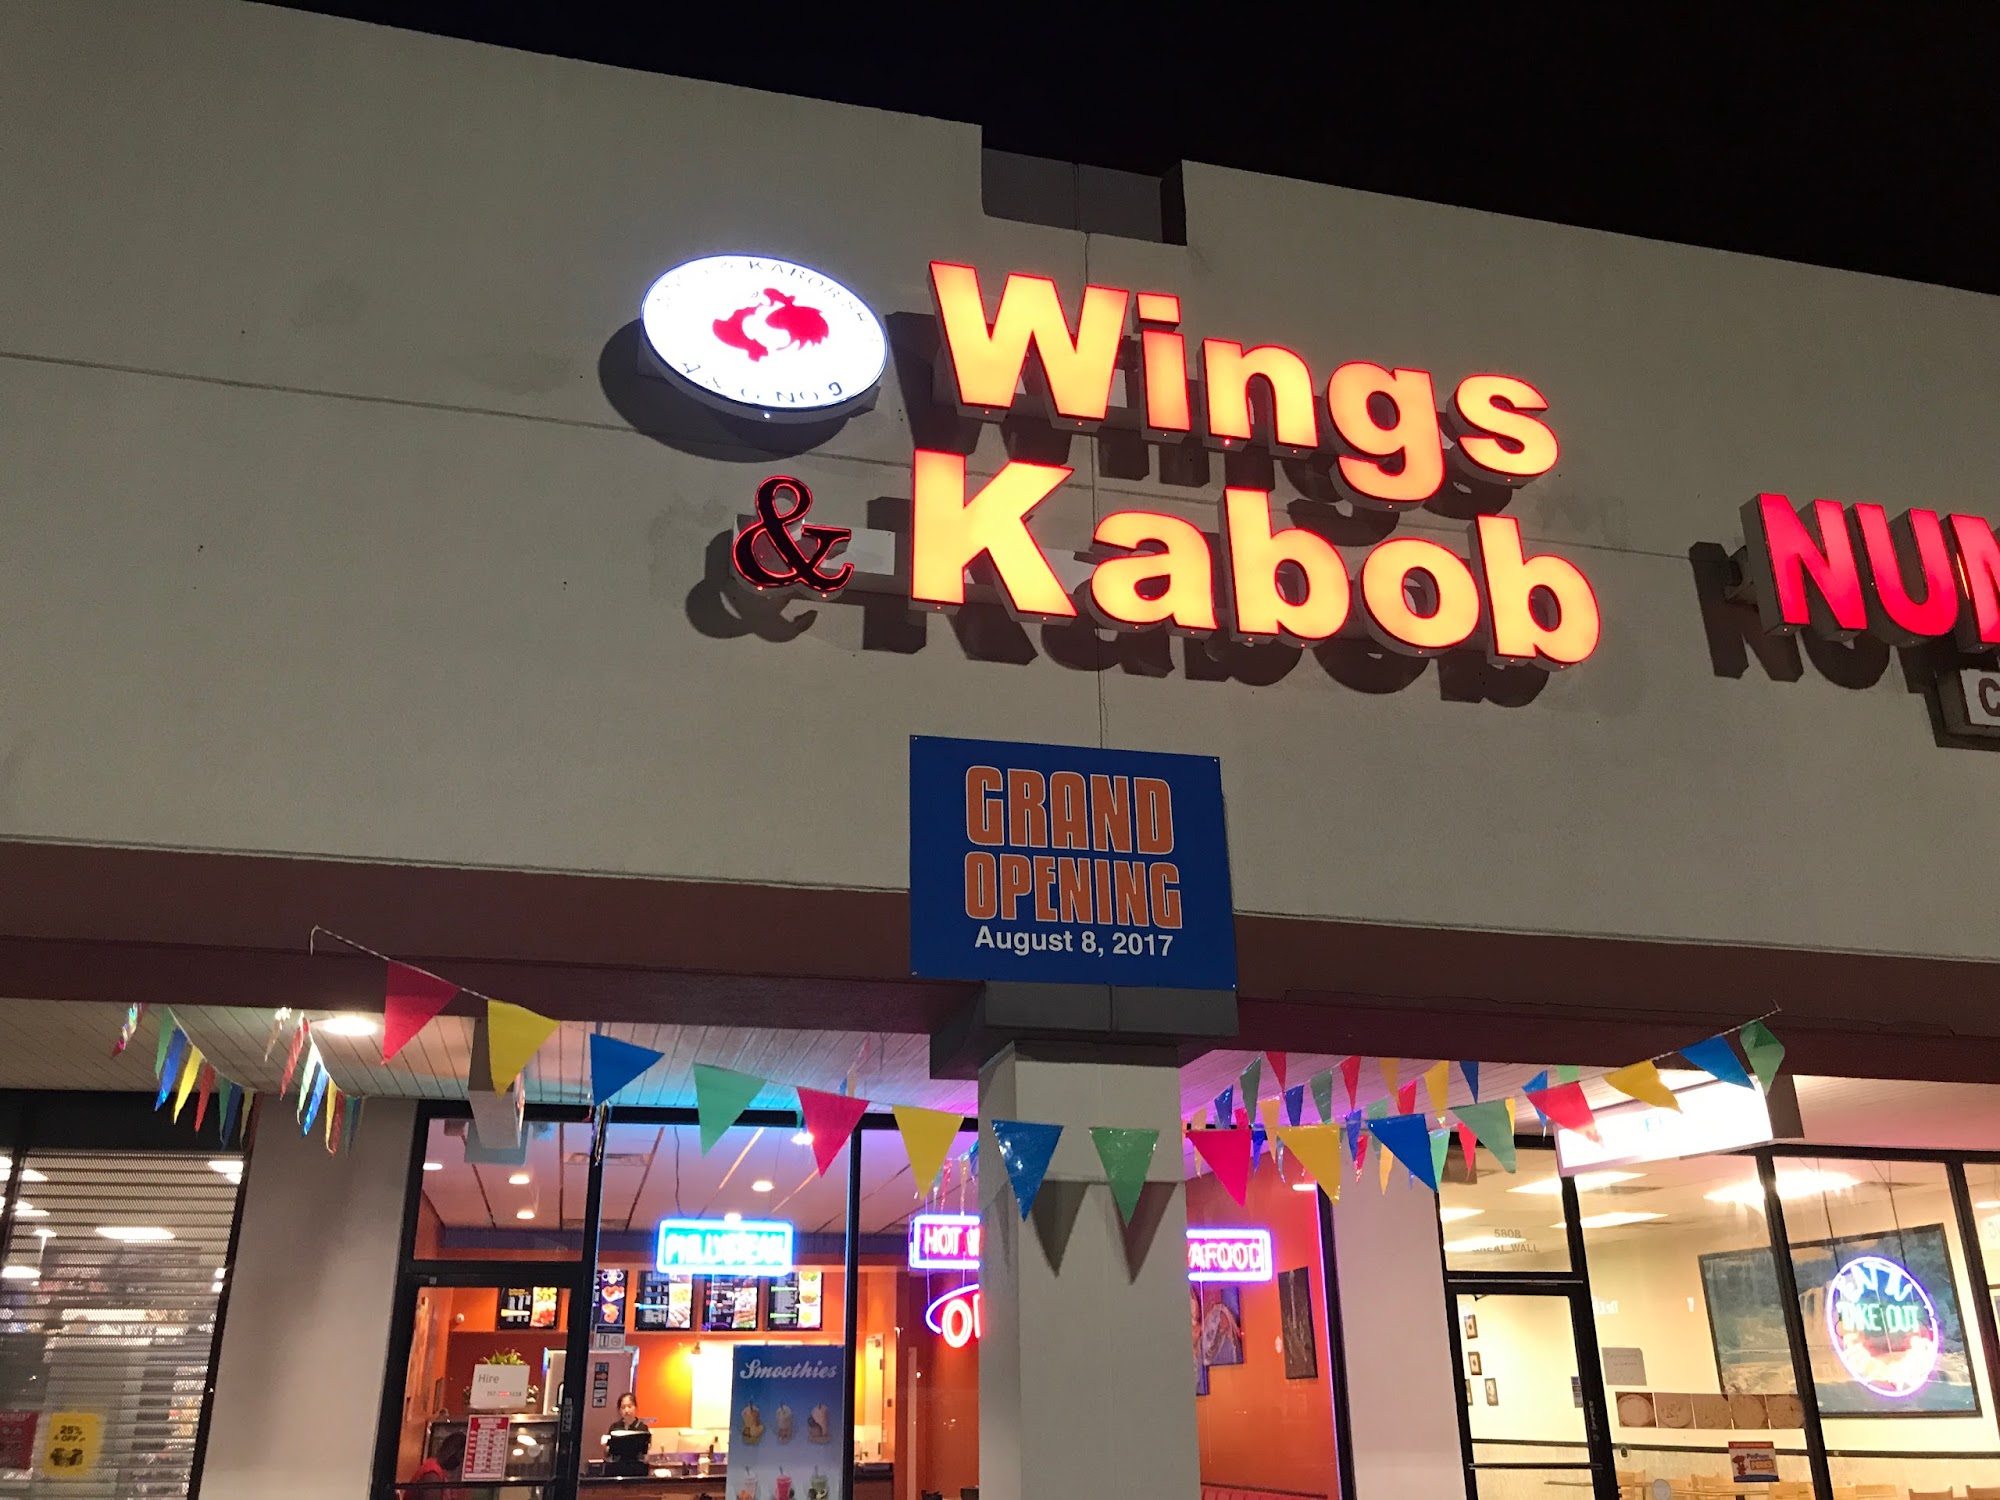 Wings & Kabob